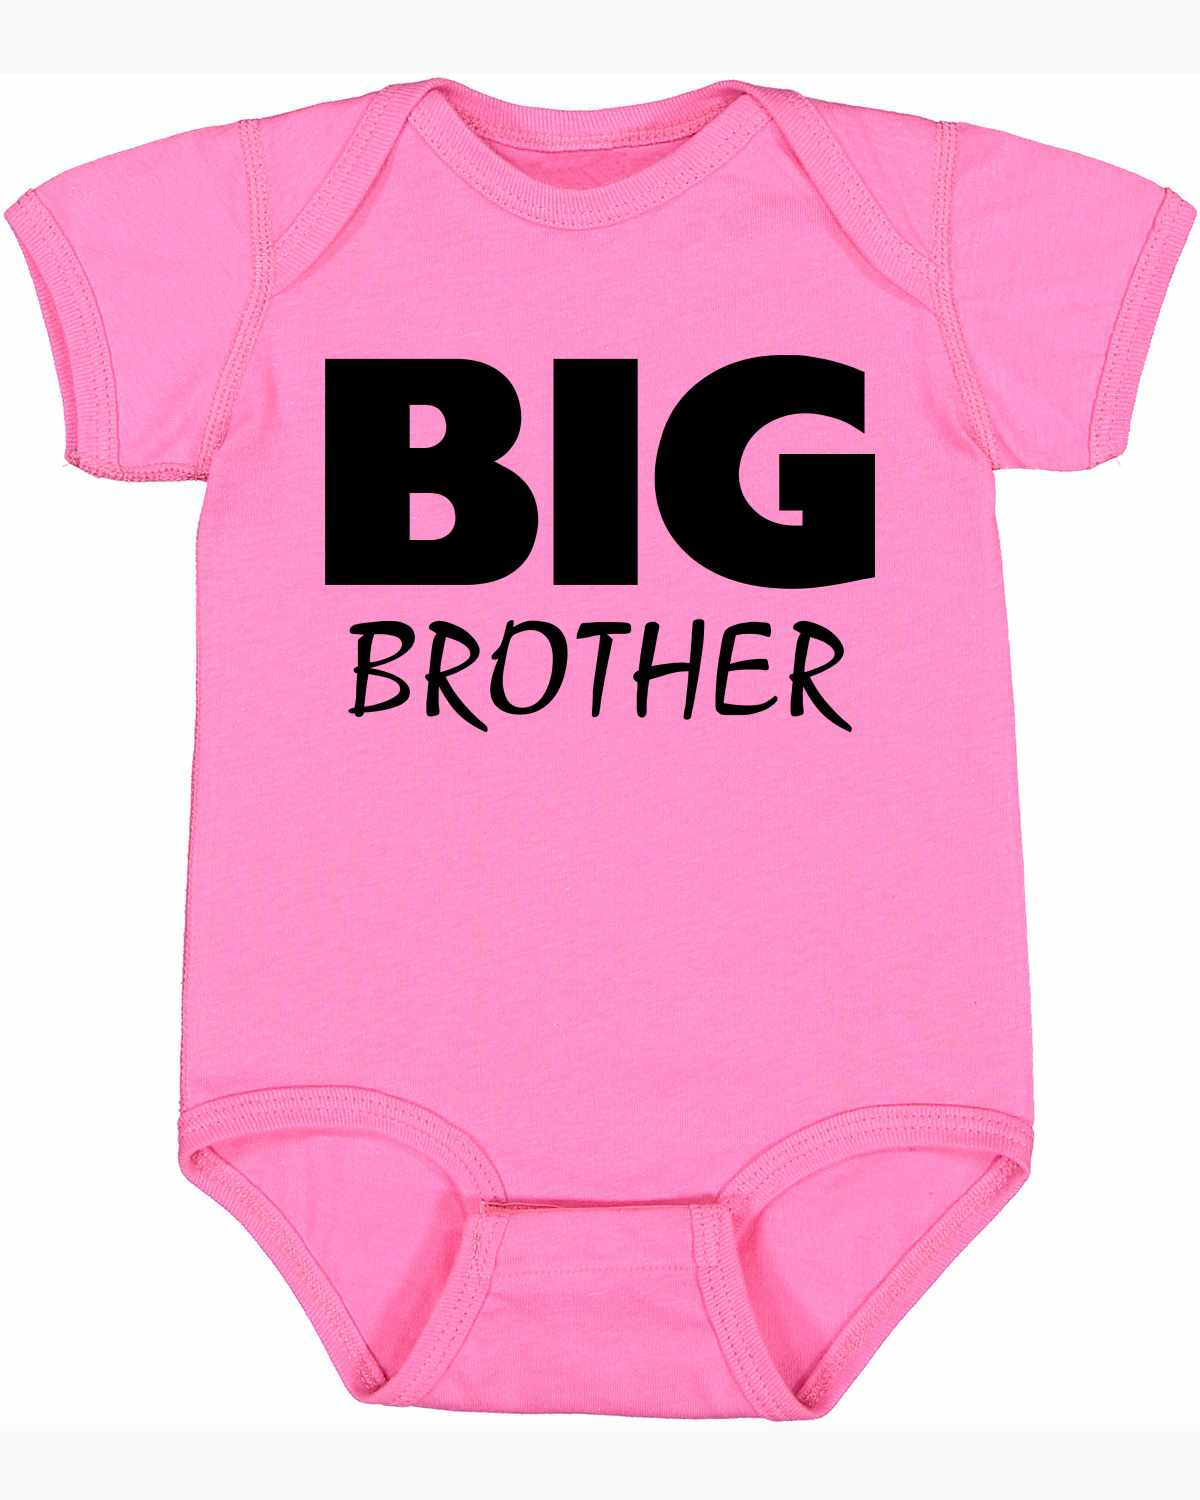 Big Brother on Infant BodySuit (#953-10)